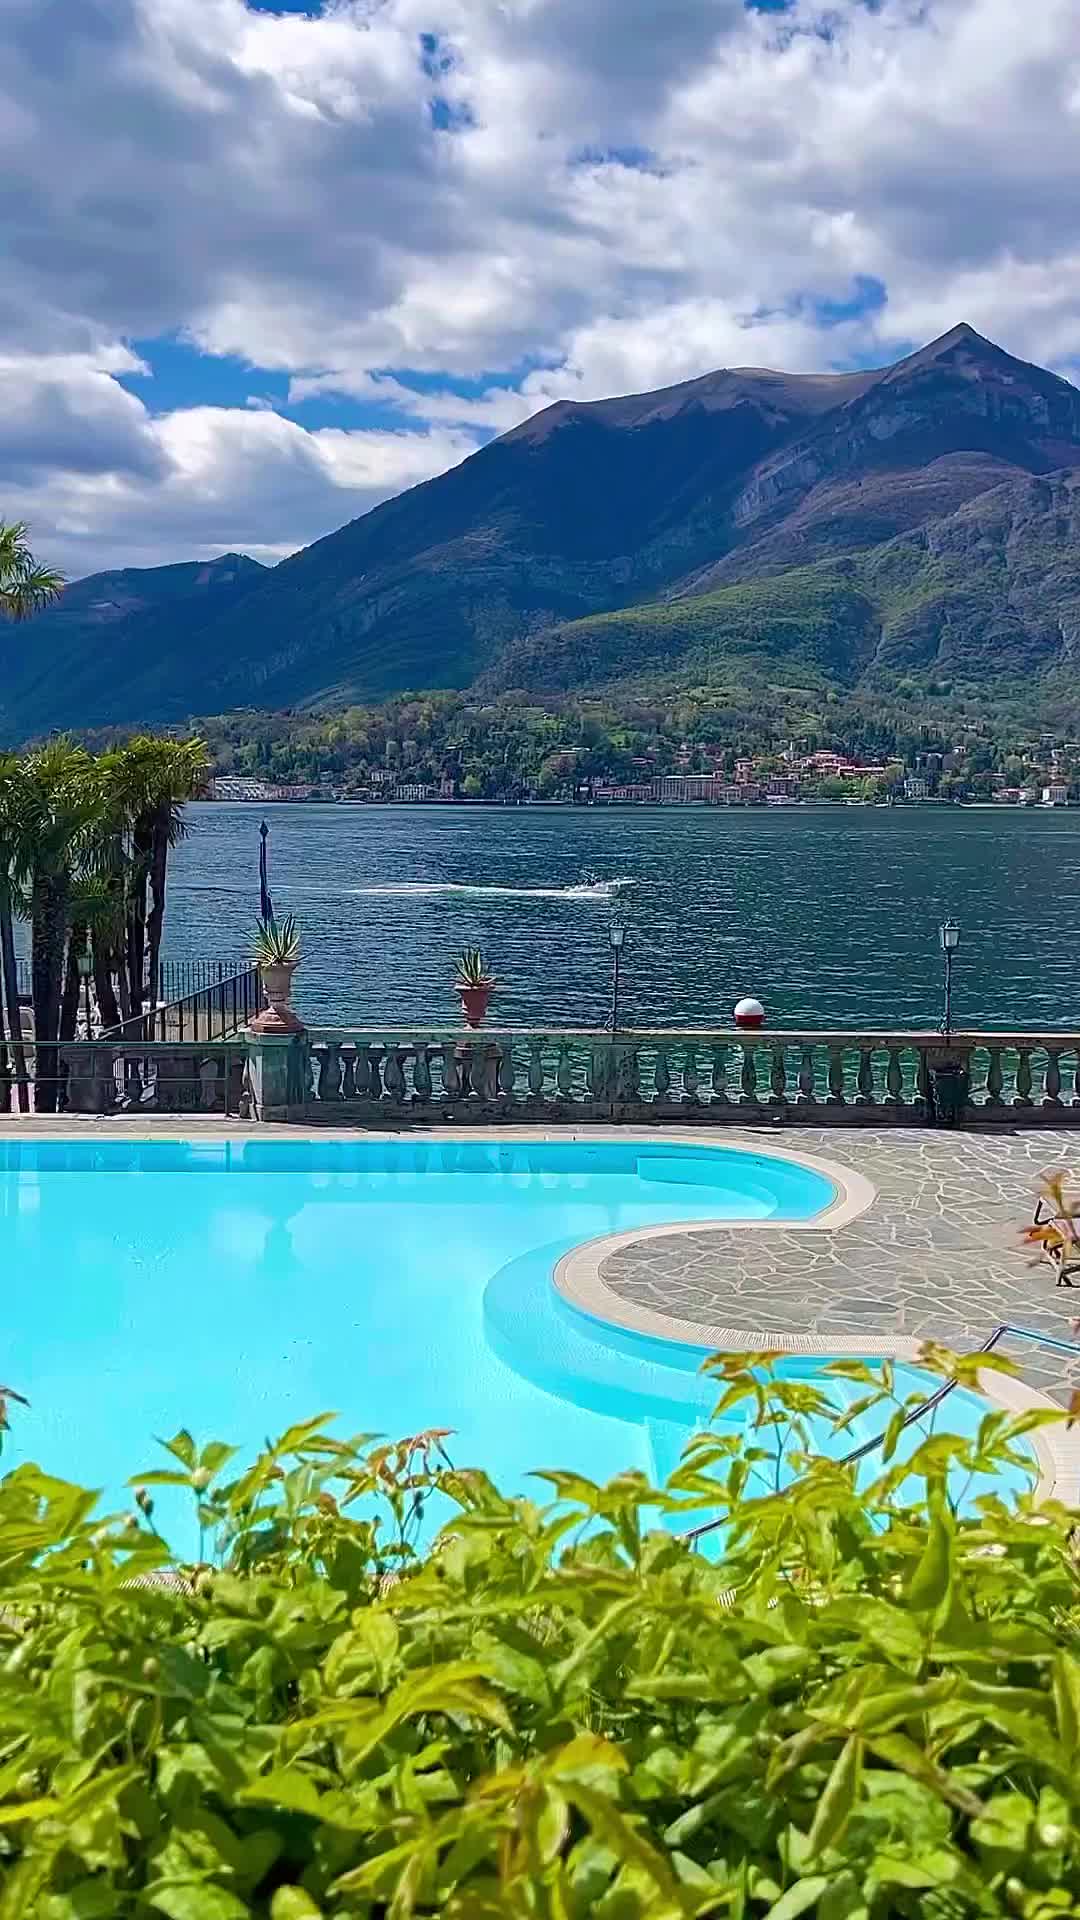 Best Moments at Grand Hotel Villa Serbelloni, Lake Como